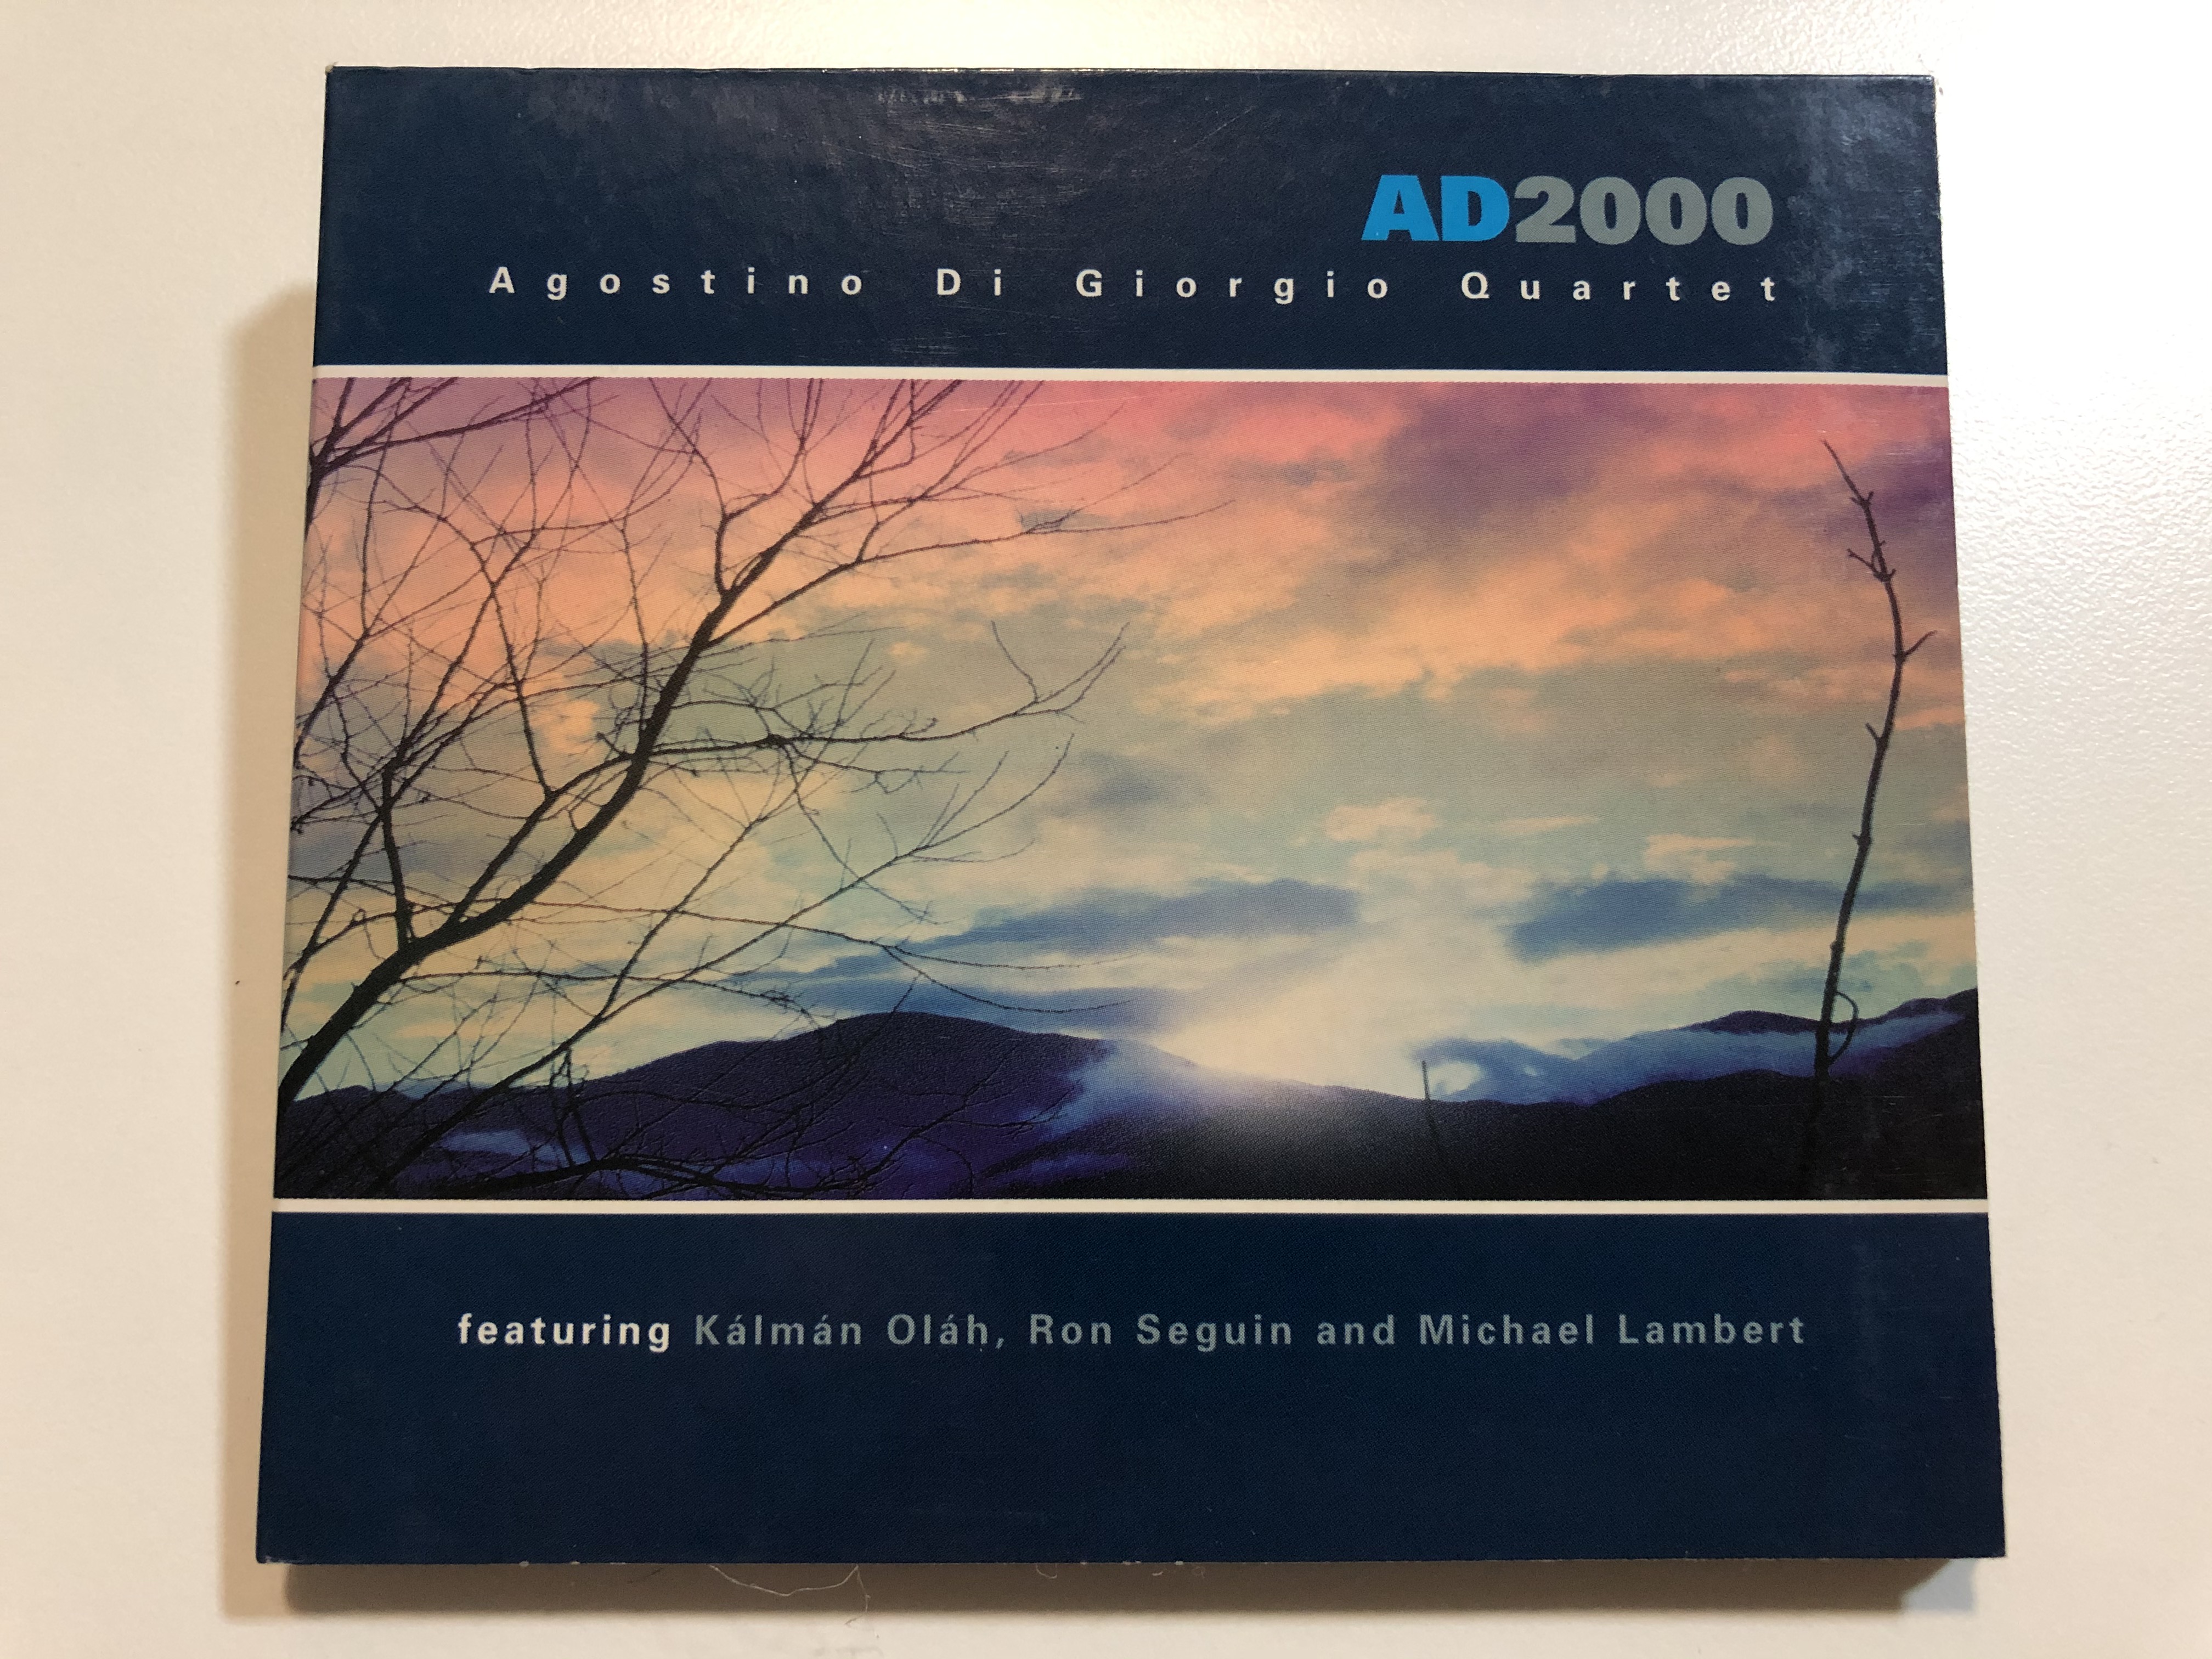 ad2000-agostino-di-giorgio-quartet-featuring-k-lm-n-ol-h-ron-seguin-and-michael-lambert-fon-records-audio-cd-2000-fa-903-2-1-.jpg